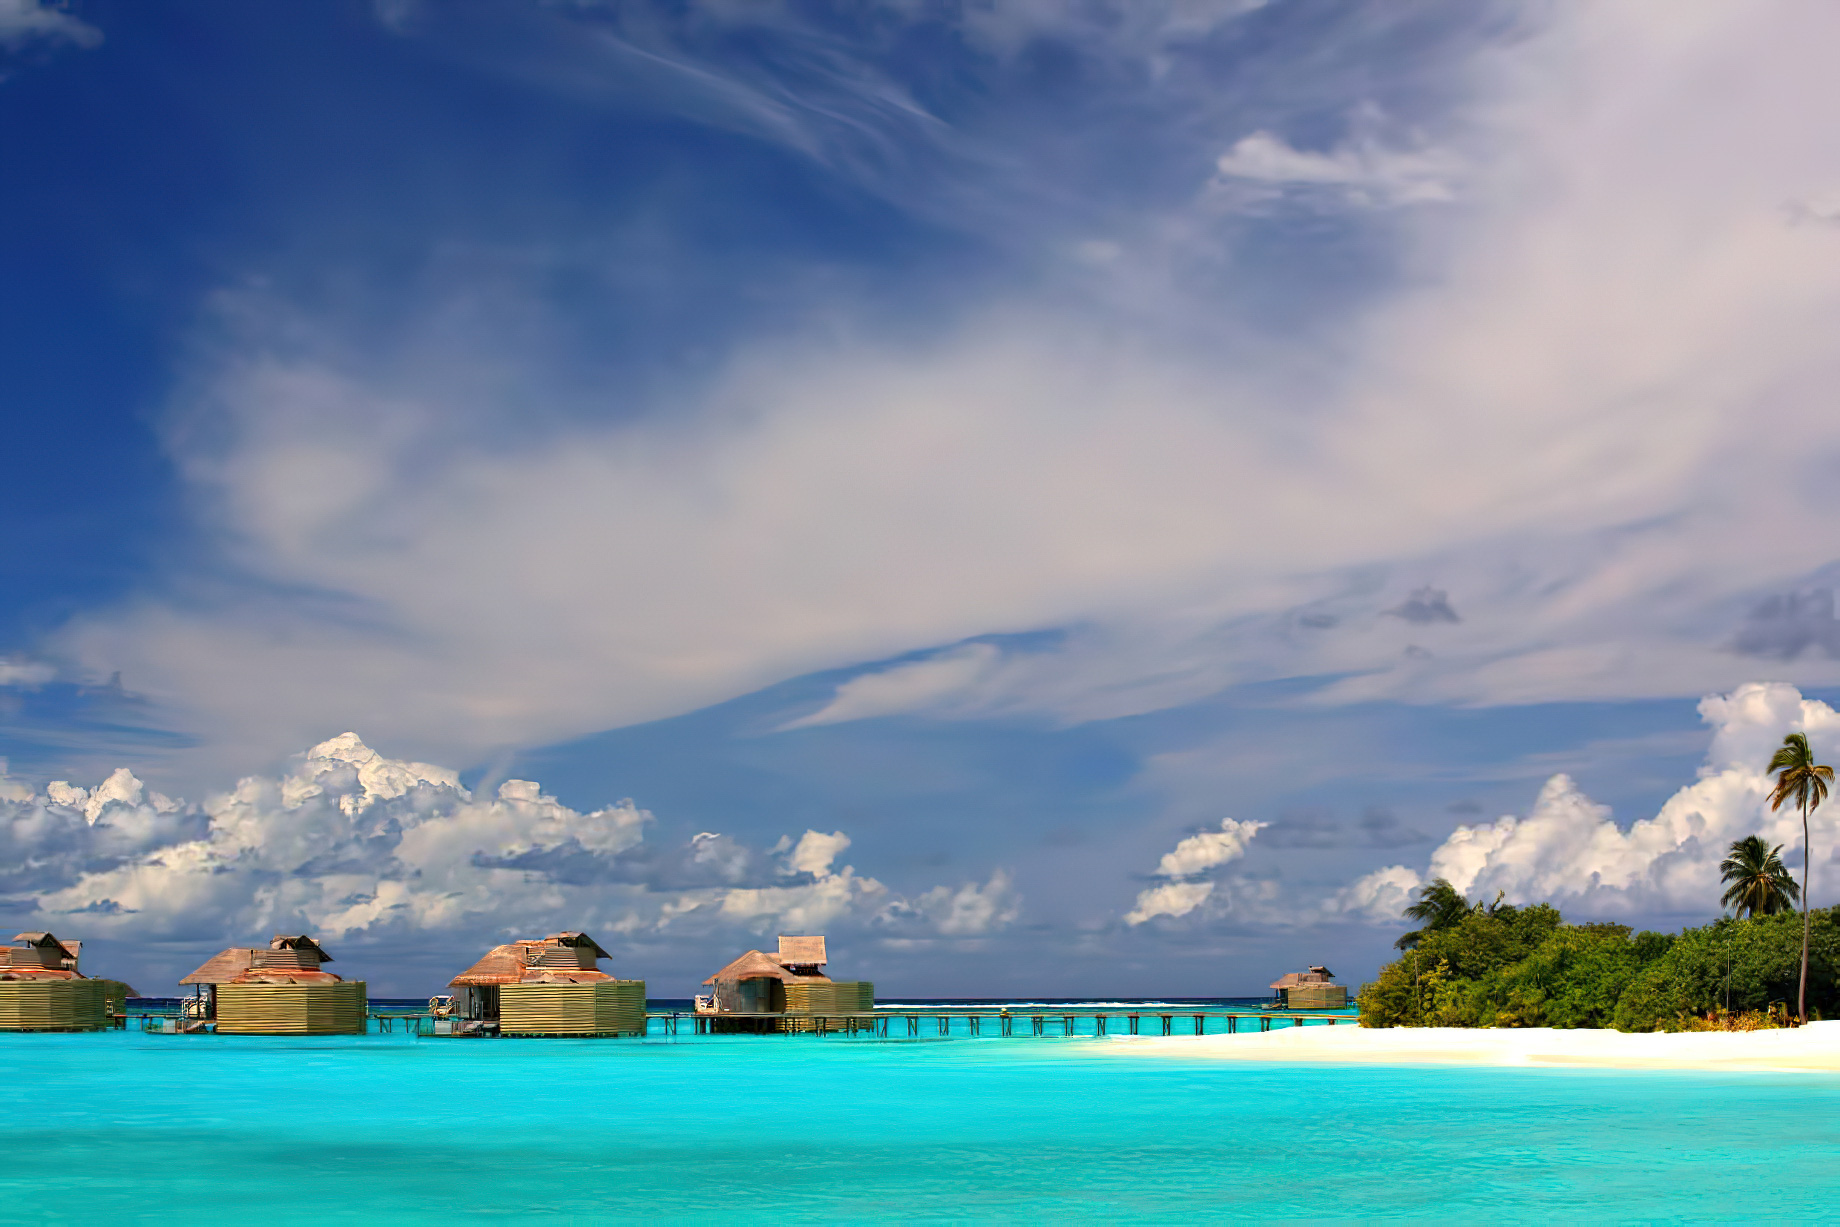 Six Senses Laamu Resort - Laamu Atoll, Maldives - Overwater Villa Boardwalk